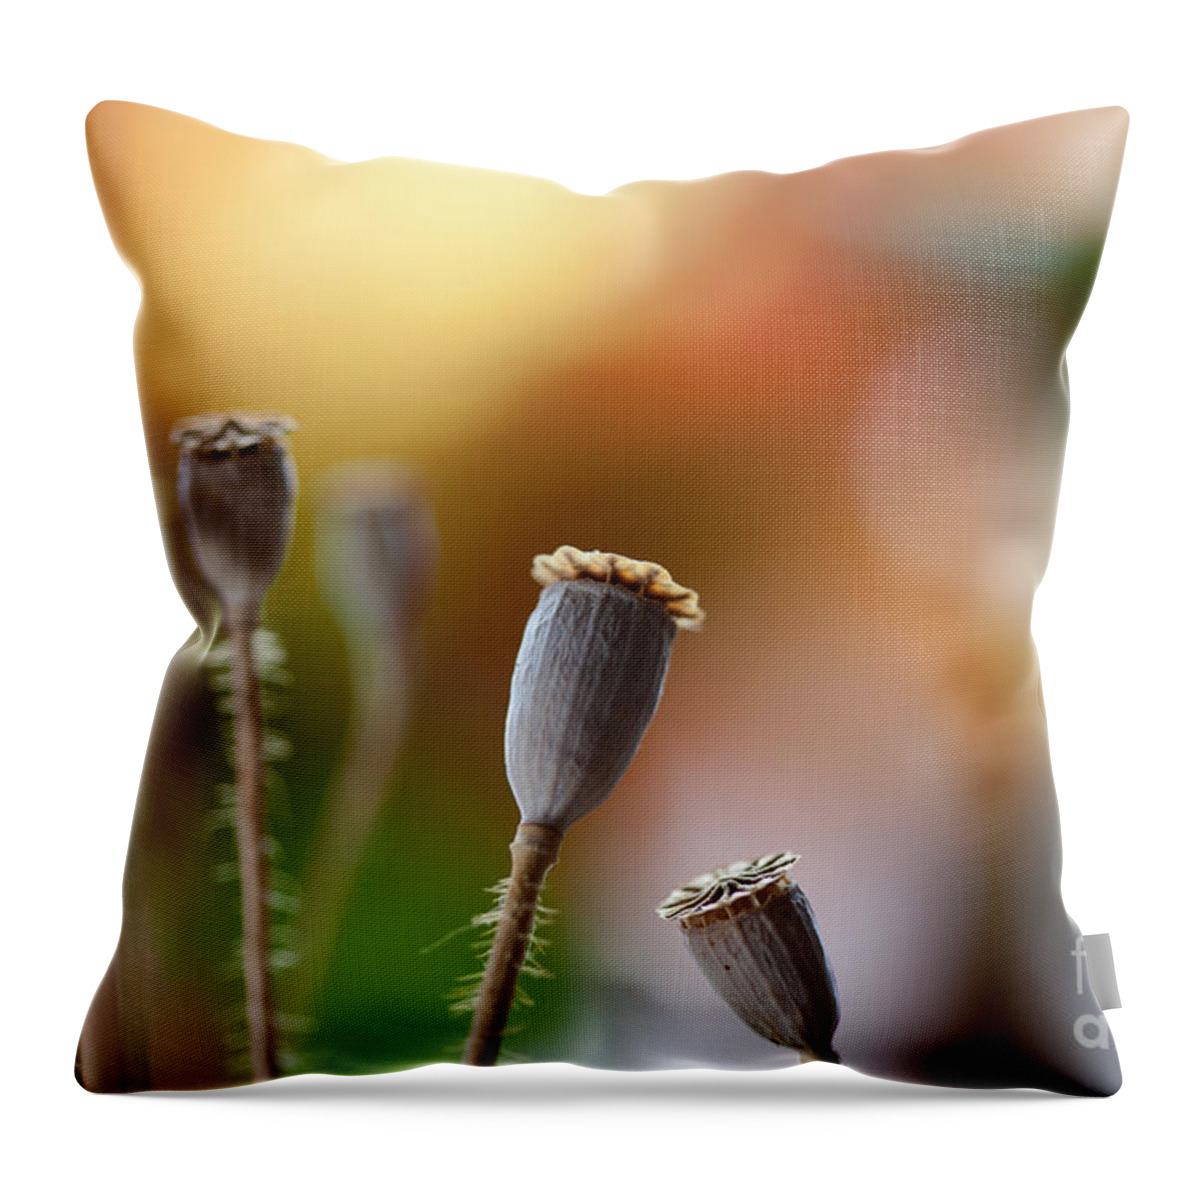 Poppy Throw Pillow featuring the photograph Poppy Pods by Nailia Schwarz